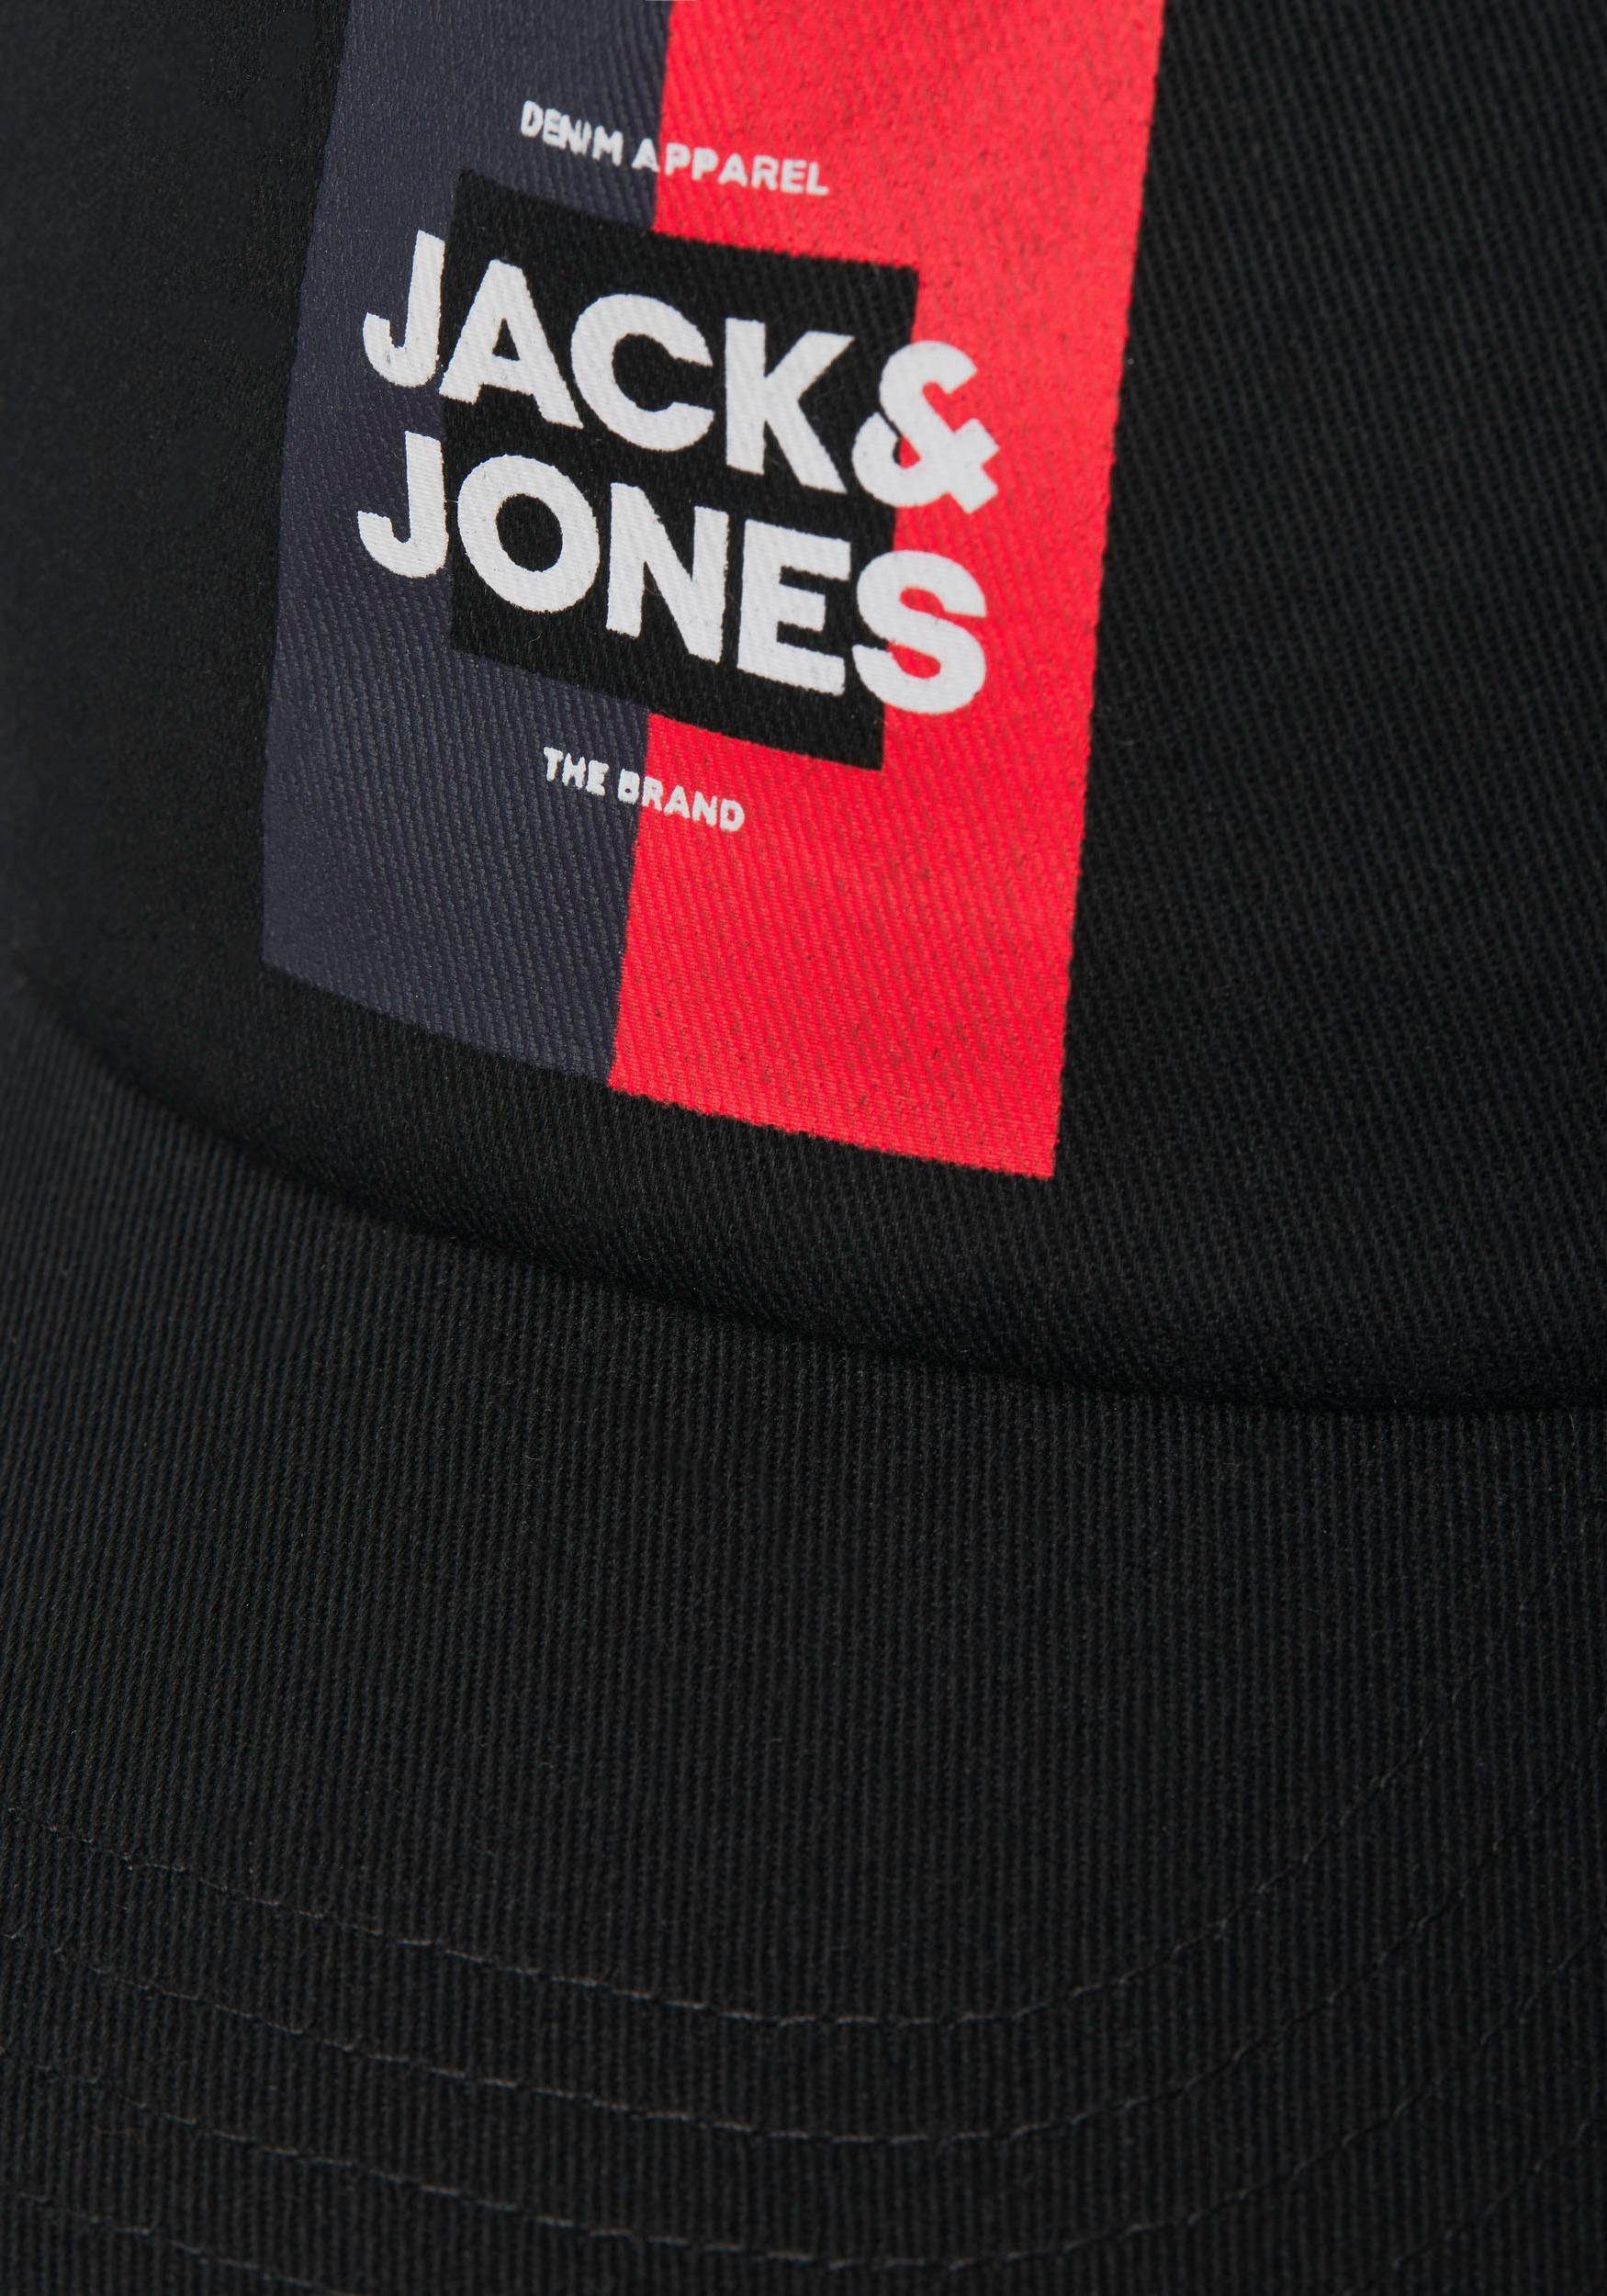 Baseball Jones Cap Jack & JACOSCAR CAP